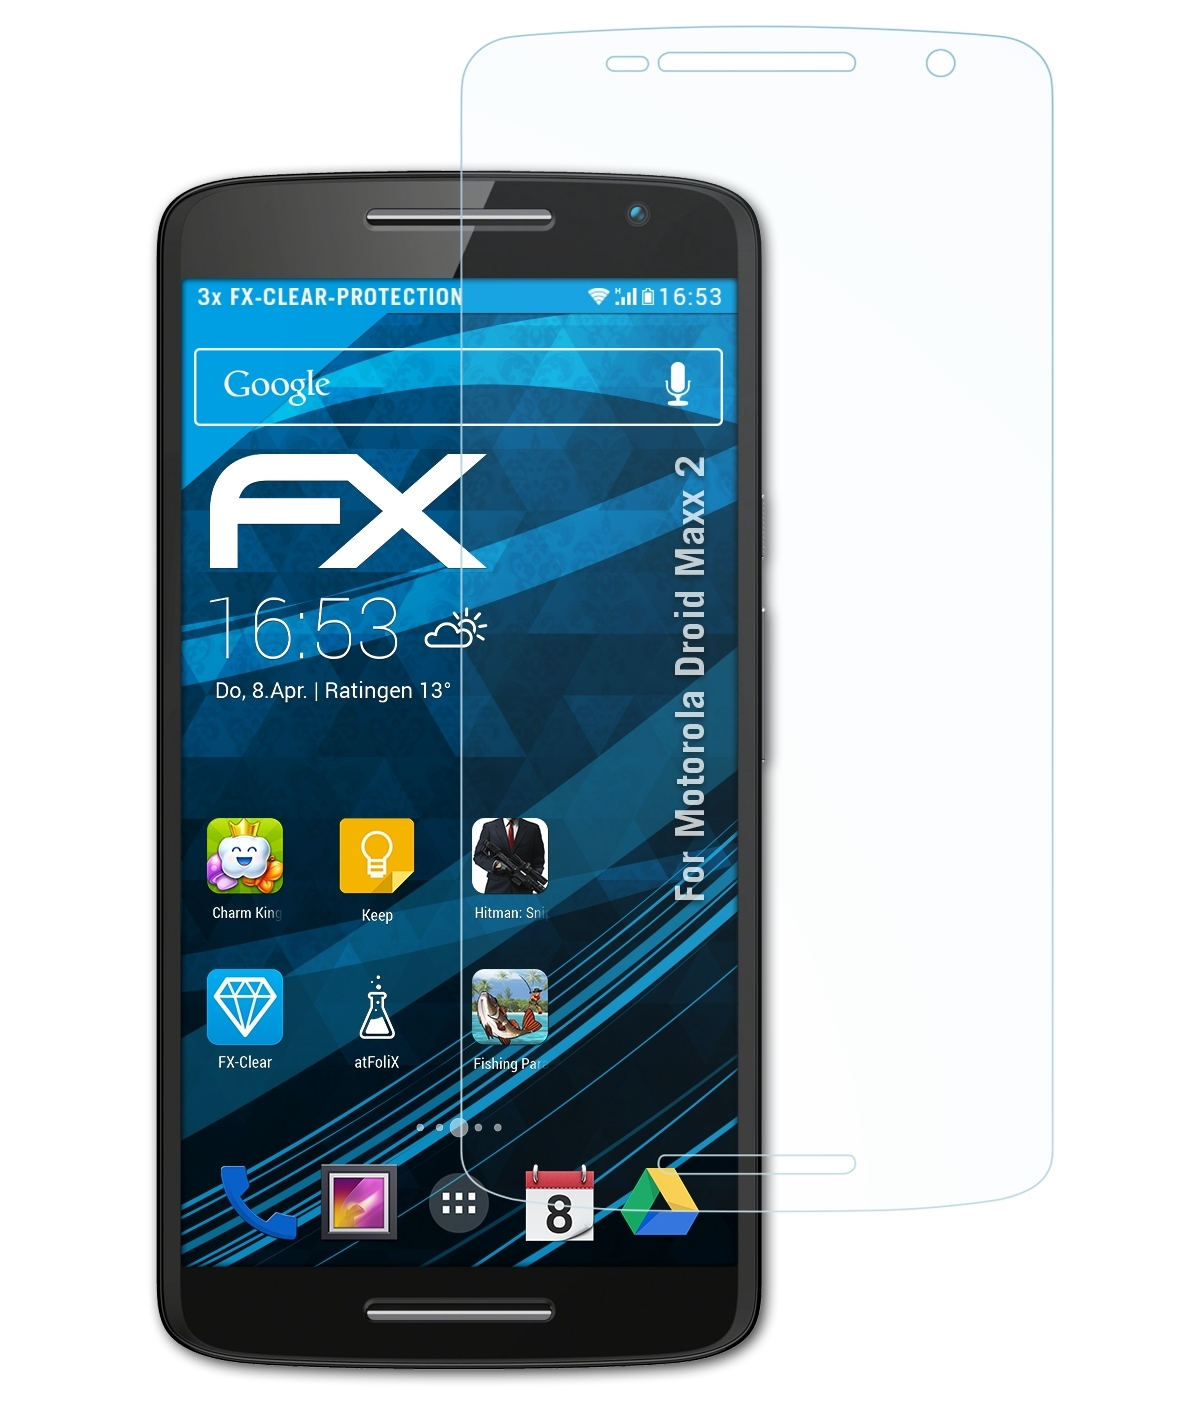 ATFOLIX 3x Maxx 2) Motorola FX-Clear Displayschutz(für Droid